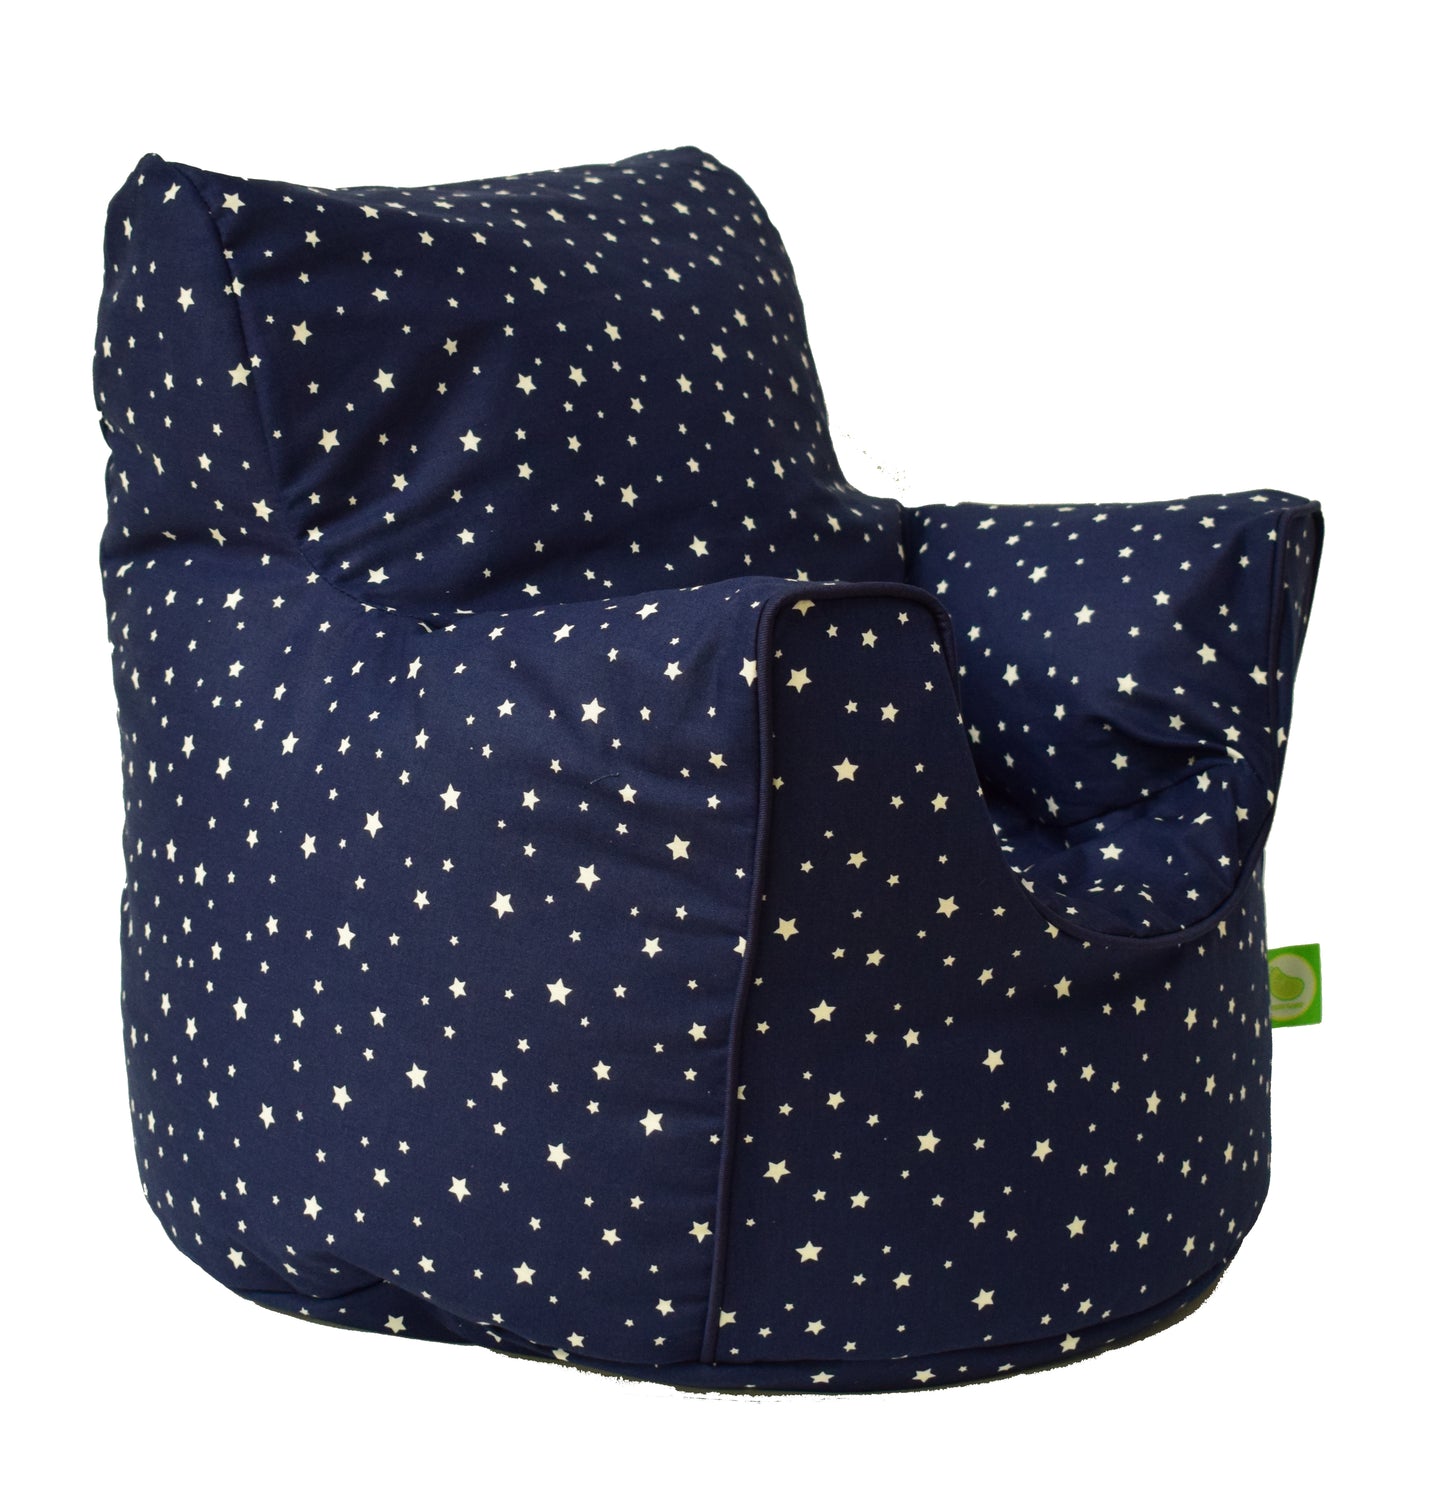 Cotton Navy Stars Bean Bag Arm Chair Toddler Size